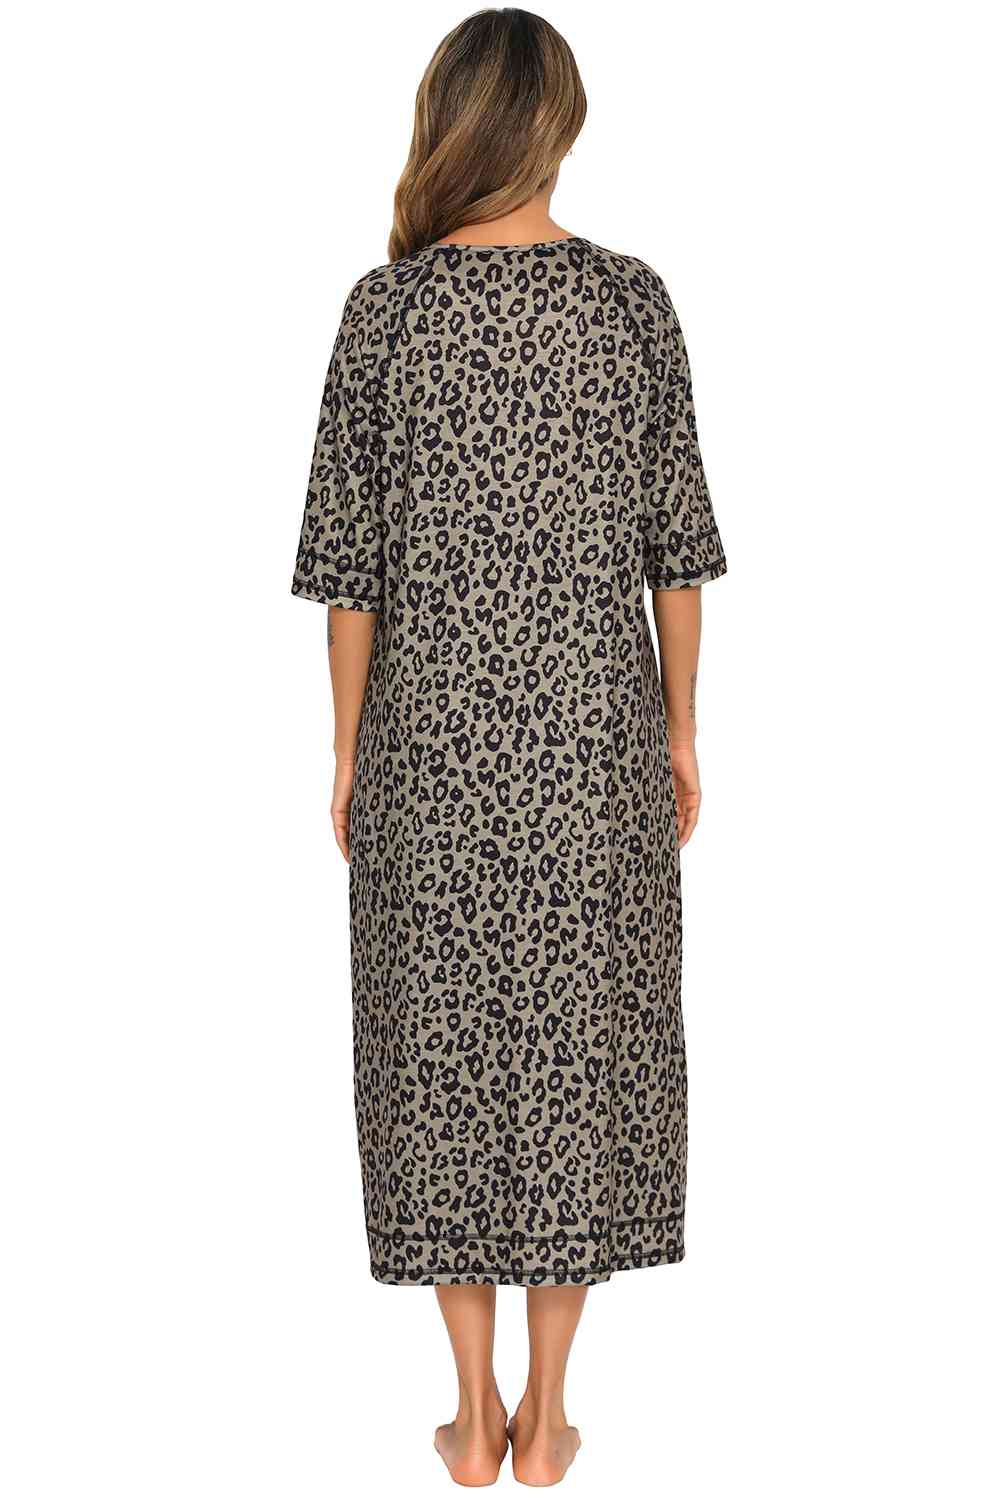 Printed Slit Night Dress with Pockets - Sufyaa